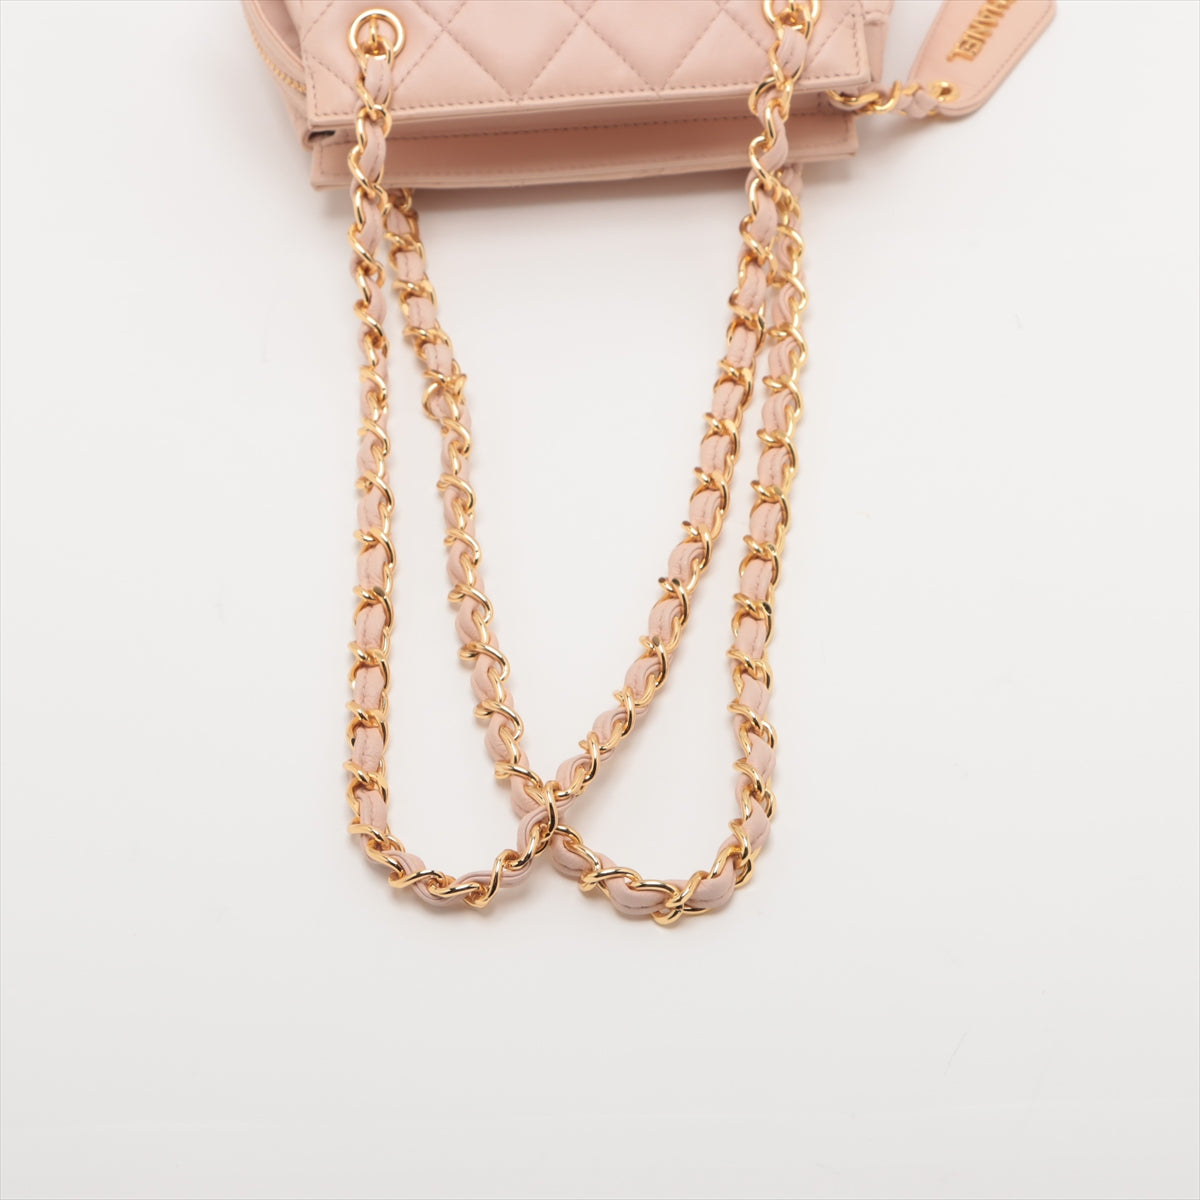 Chanel Matelasse Lambskin Chain shoulder bag Pink Gold Metal fittings 3XXXXXX